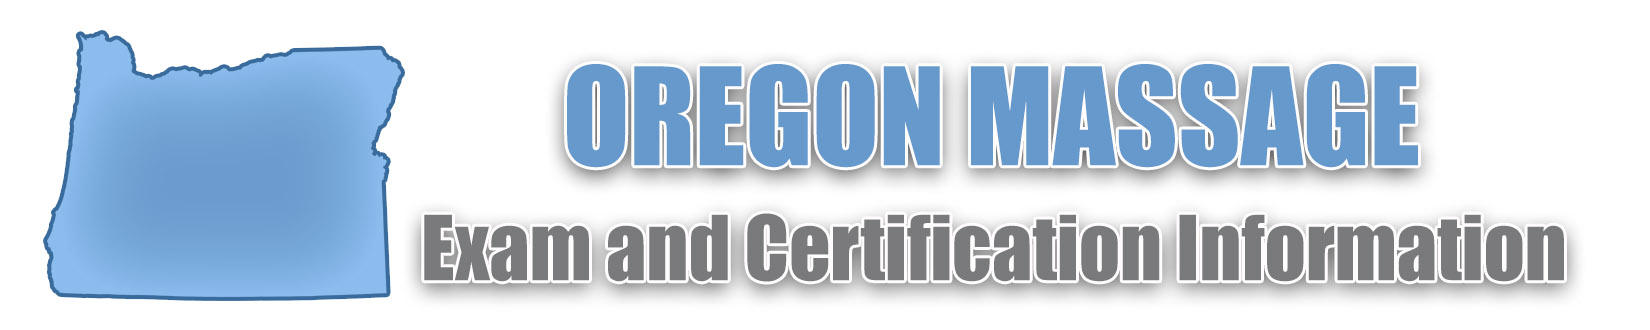 Oregon MBLEX Massage Exam and Certification Information